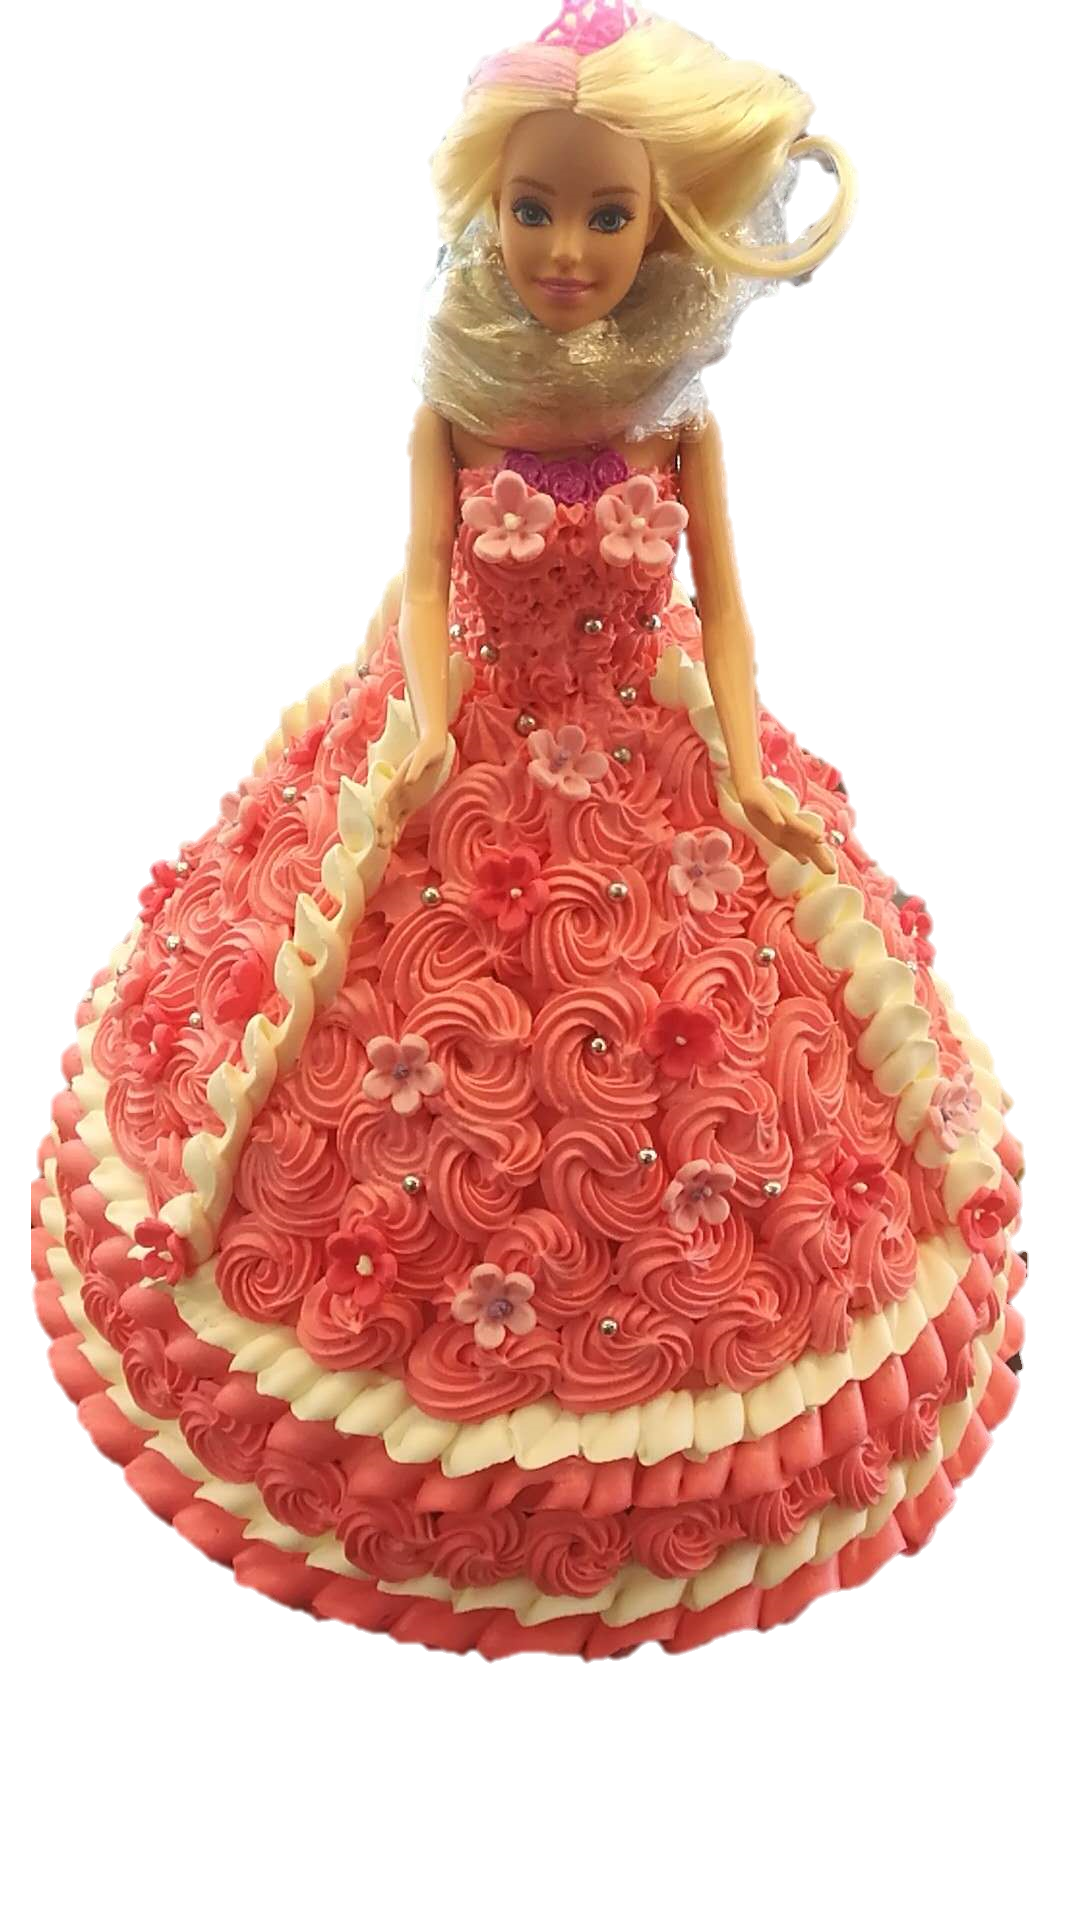 Pin by Marlene Machin on Buttercream cakes | Princess doll cake, Barbie cake  designs, Doll cake designs